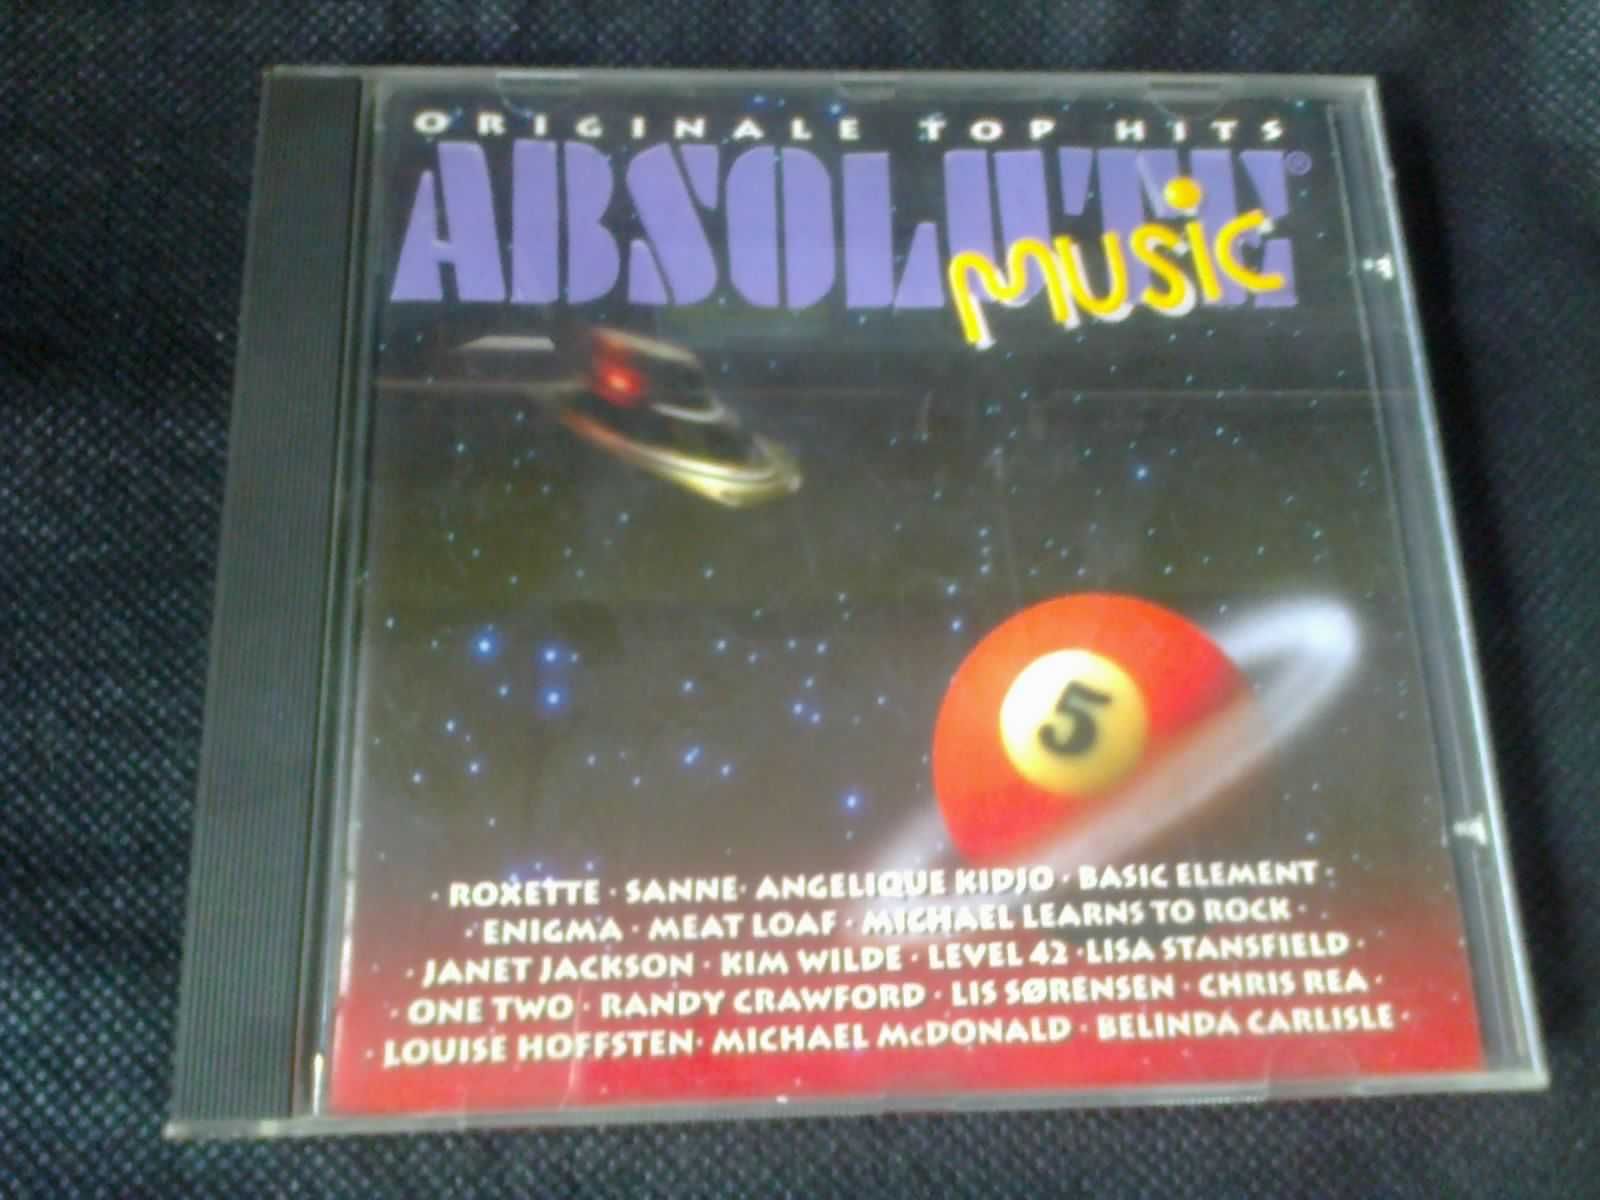 Płyta cd Absolute music 1994 wyd eva records